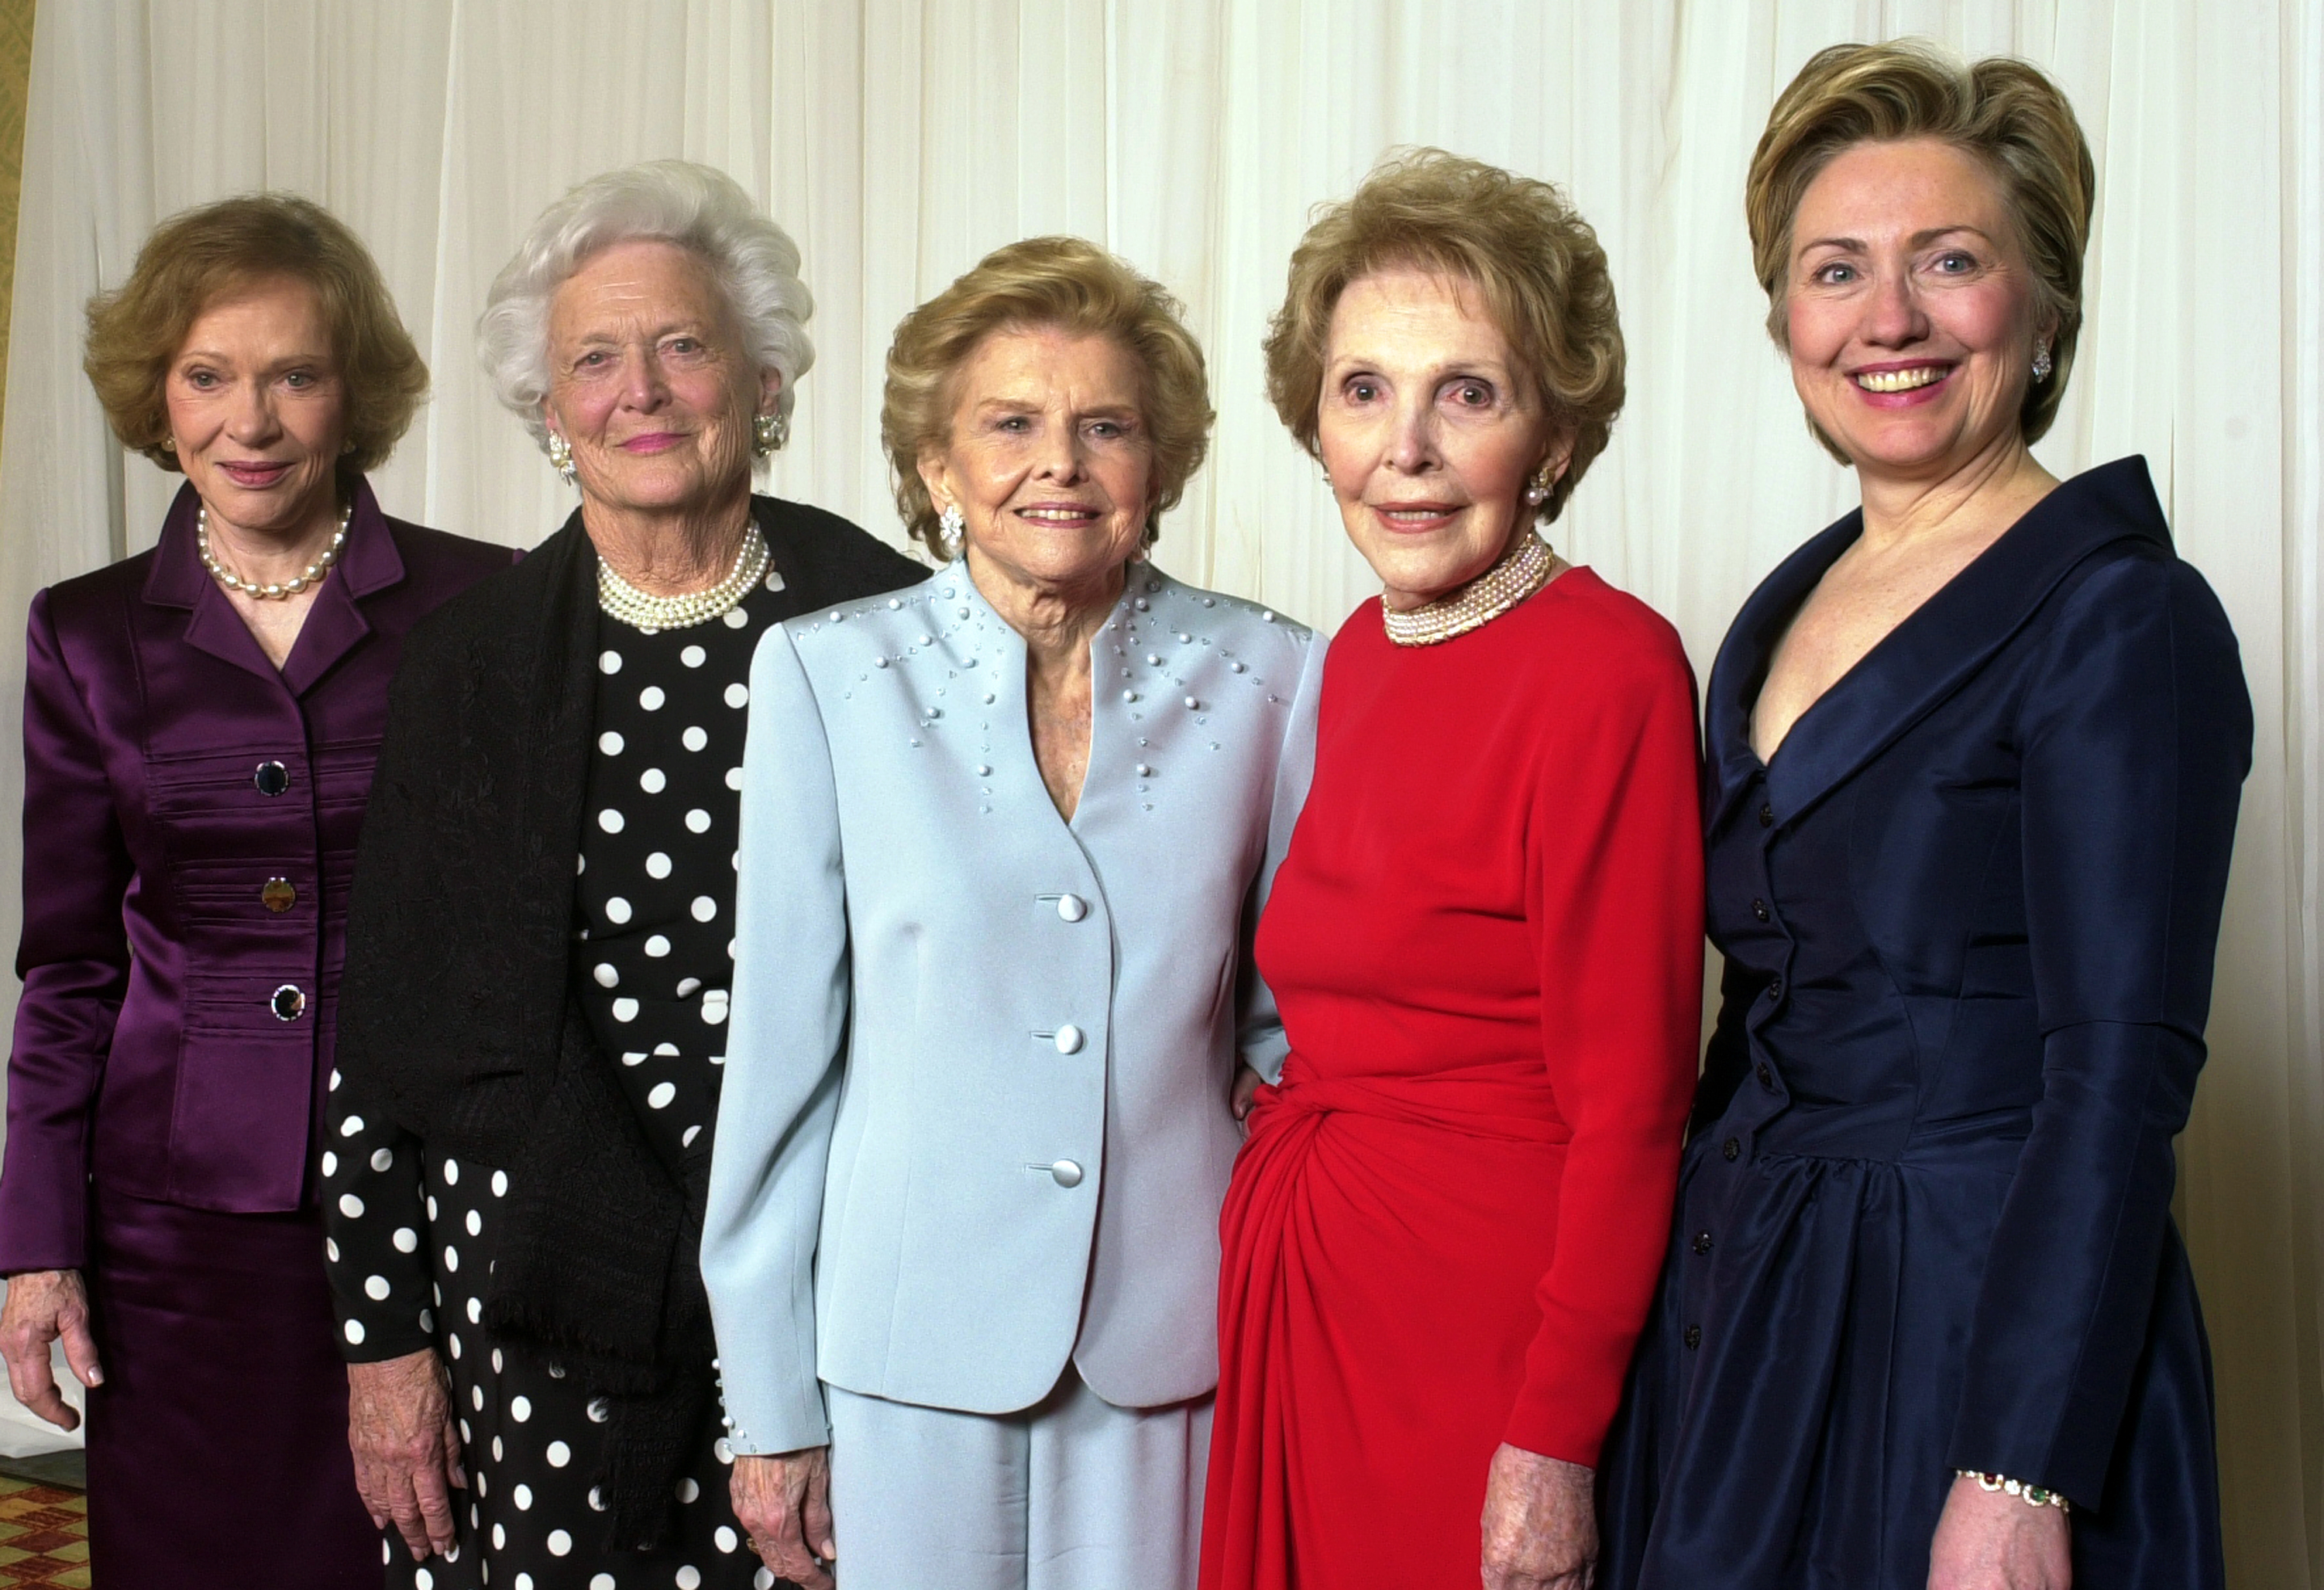 Rosalynn Carter, Barbara Bush, Betty Ford, Nancy Reagan, Hillary Rodham Clinton